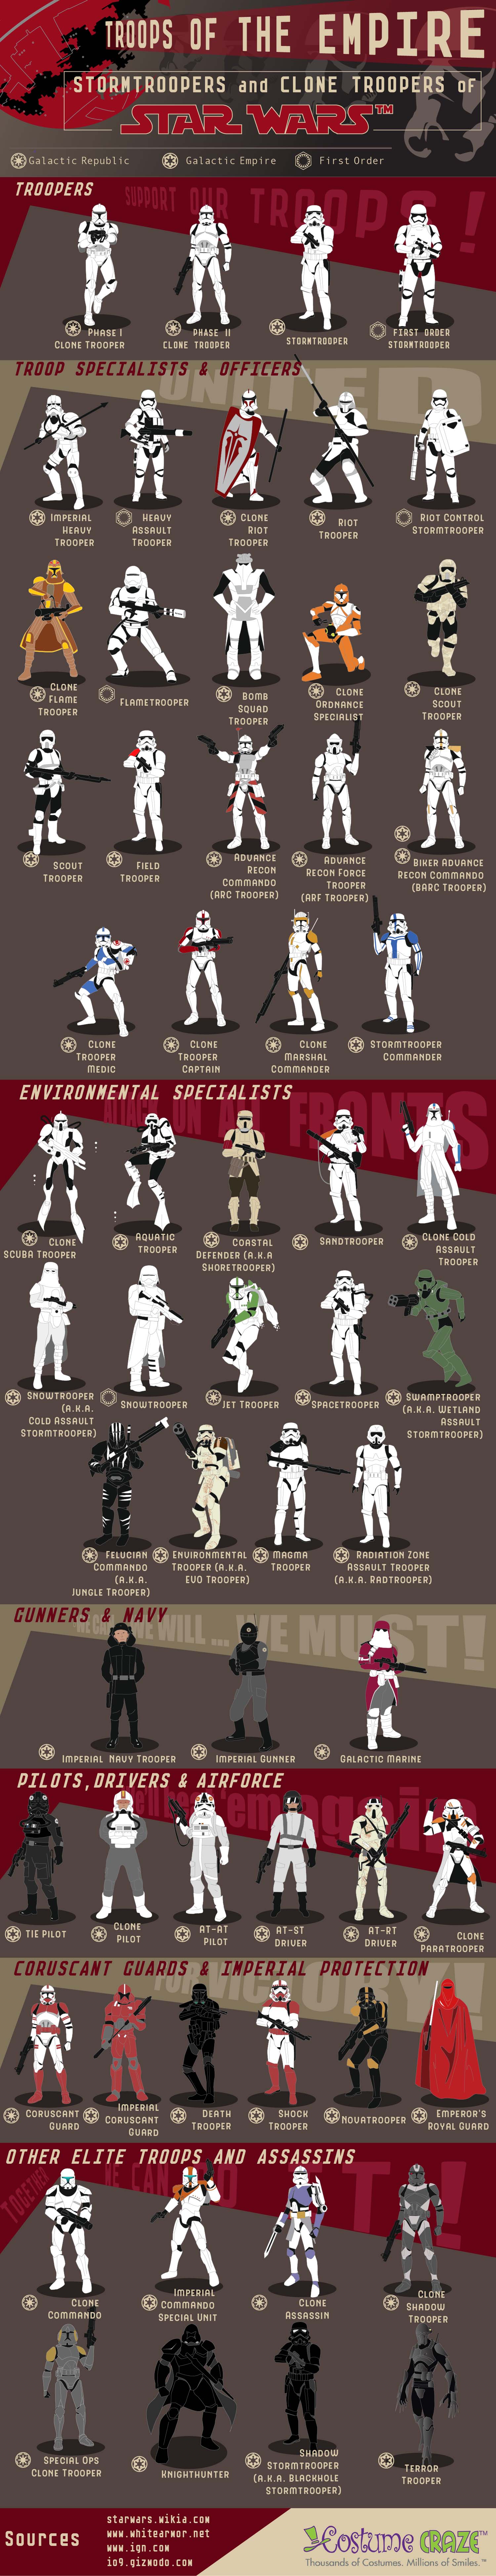 Stormtroopers & Clone Troopers of Star Wars